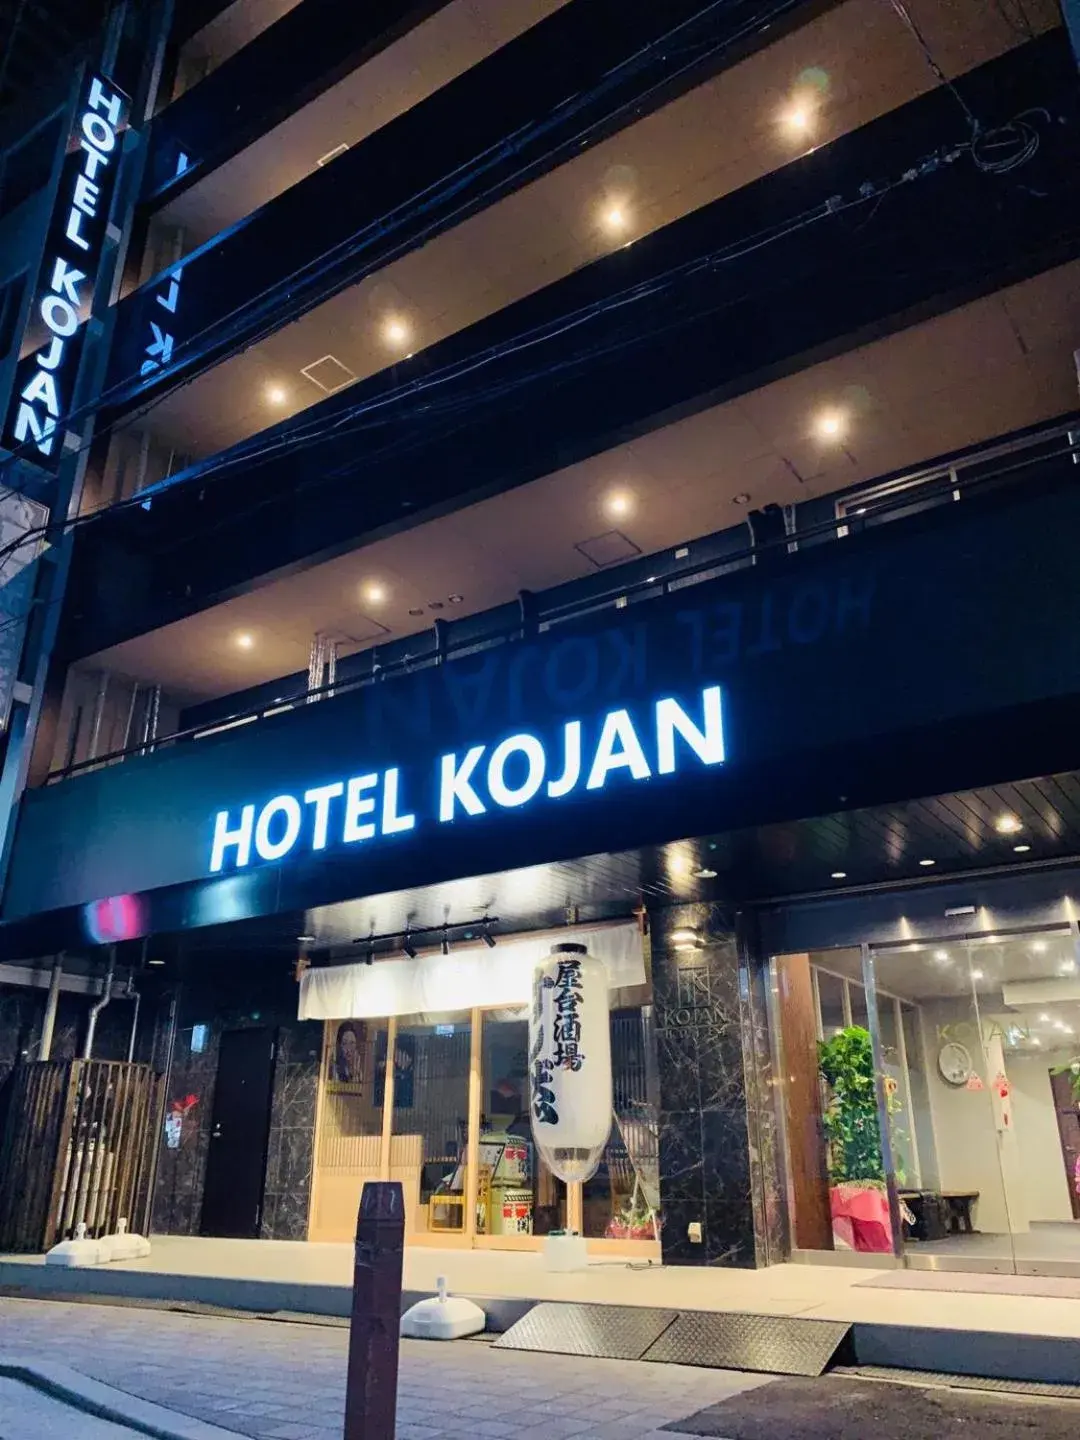 Property logo or sign in Hotel Kojan